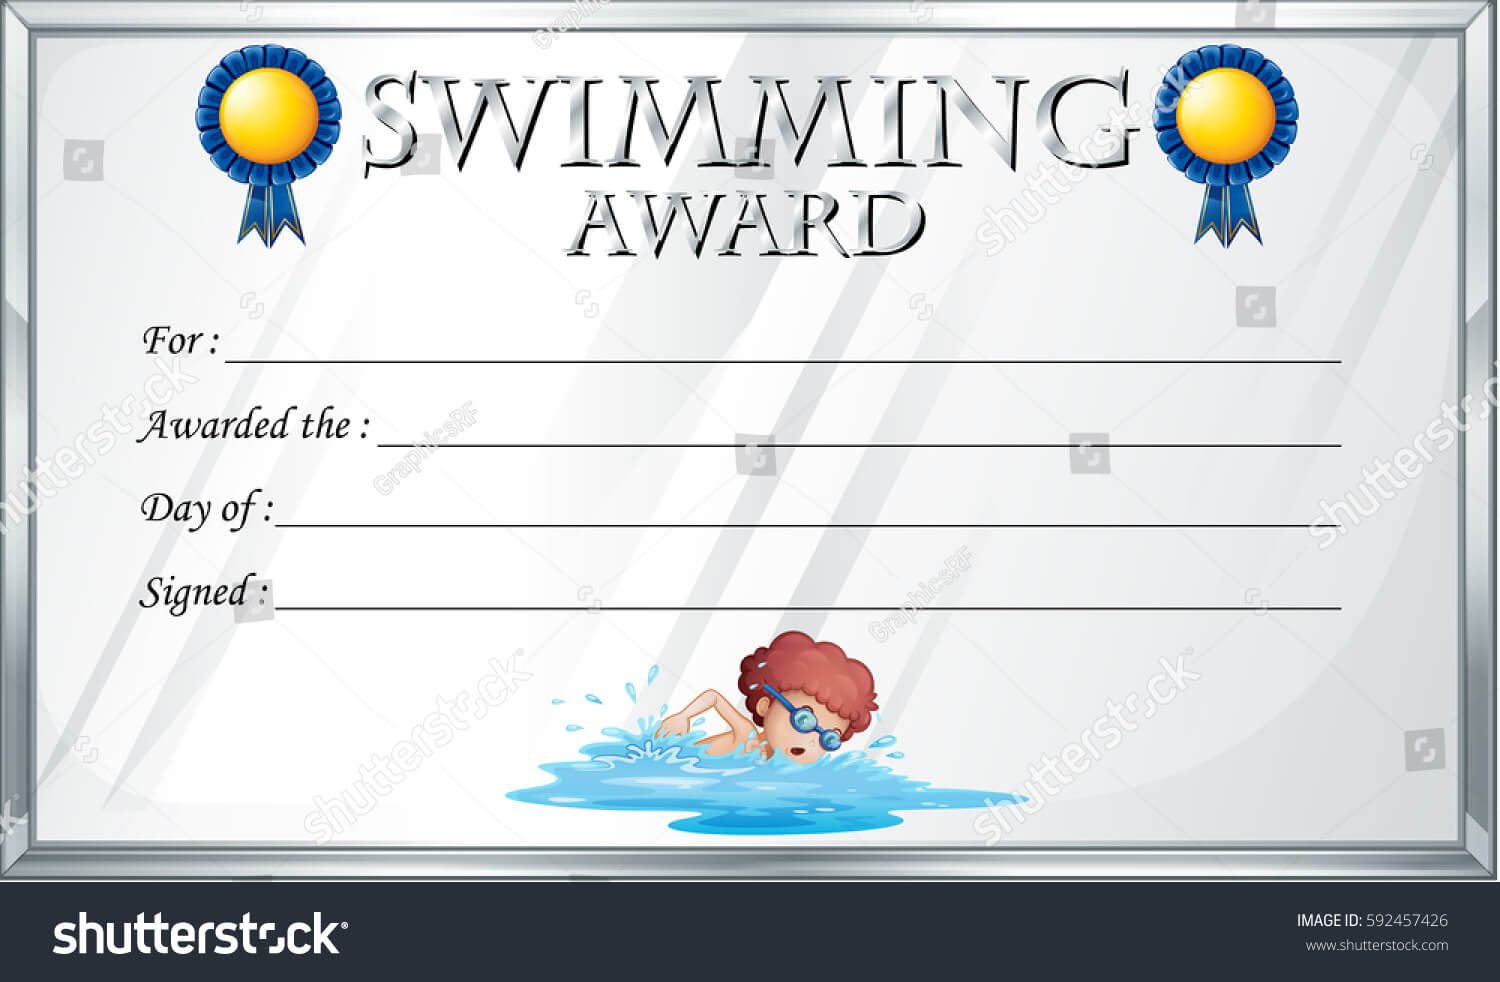 Certificate Template Swimming Award Illustration Stock For Swimming Award Certificate Template